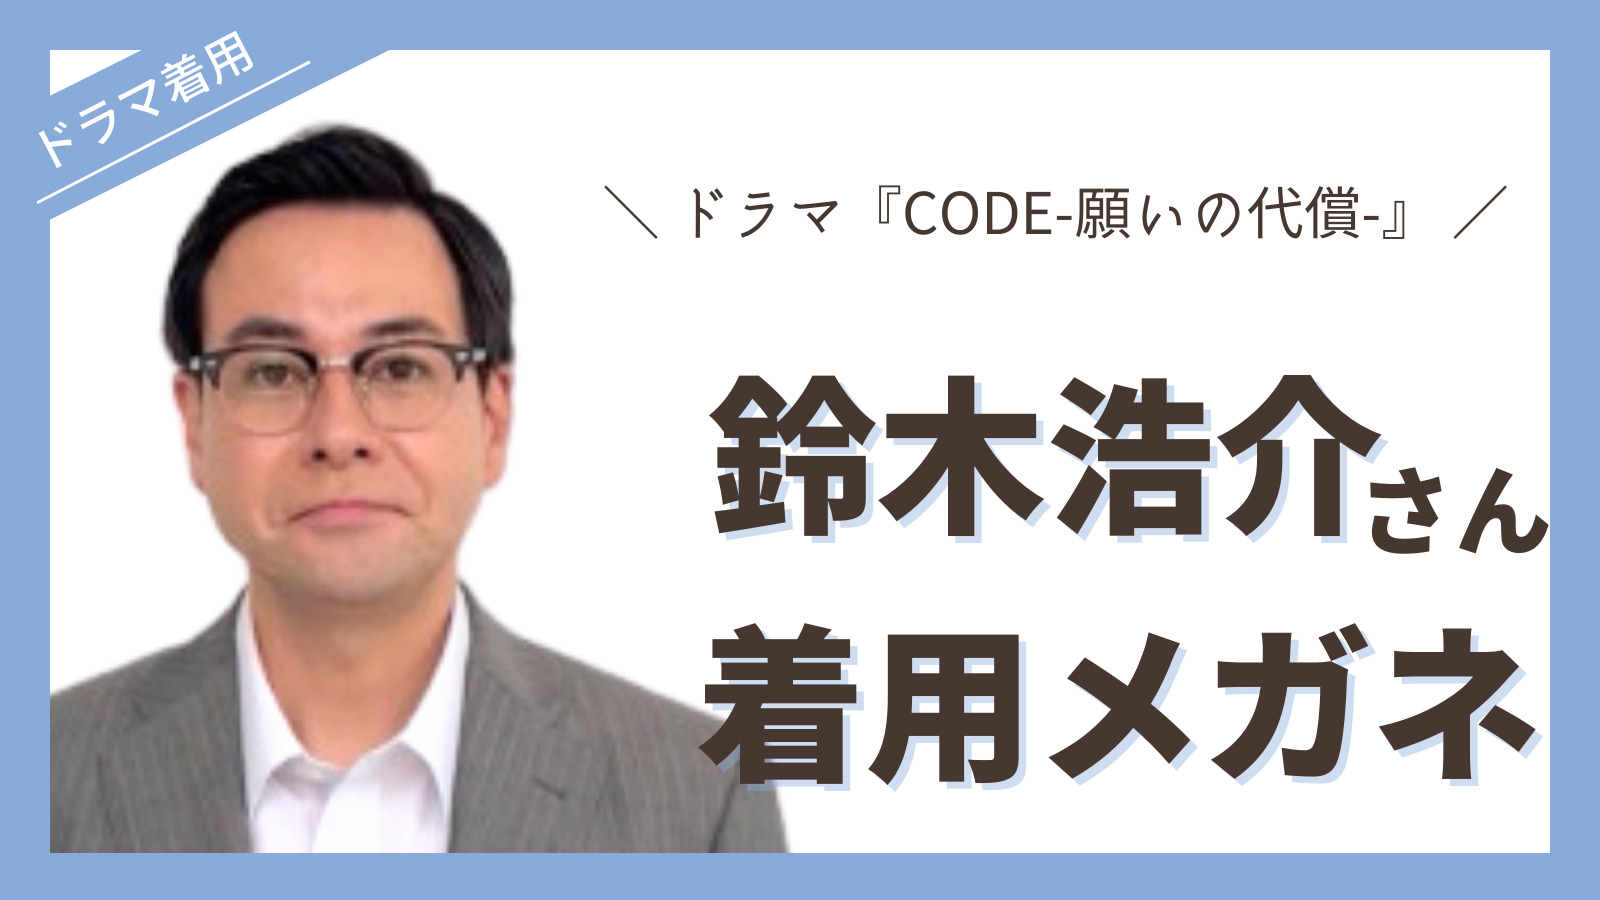 code-suzuki-megane